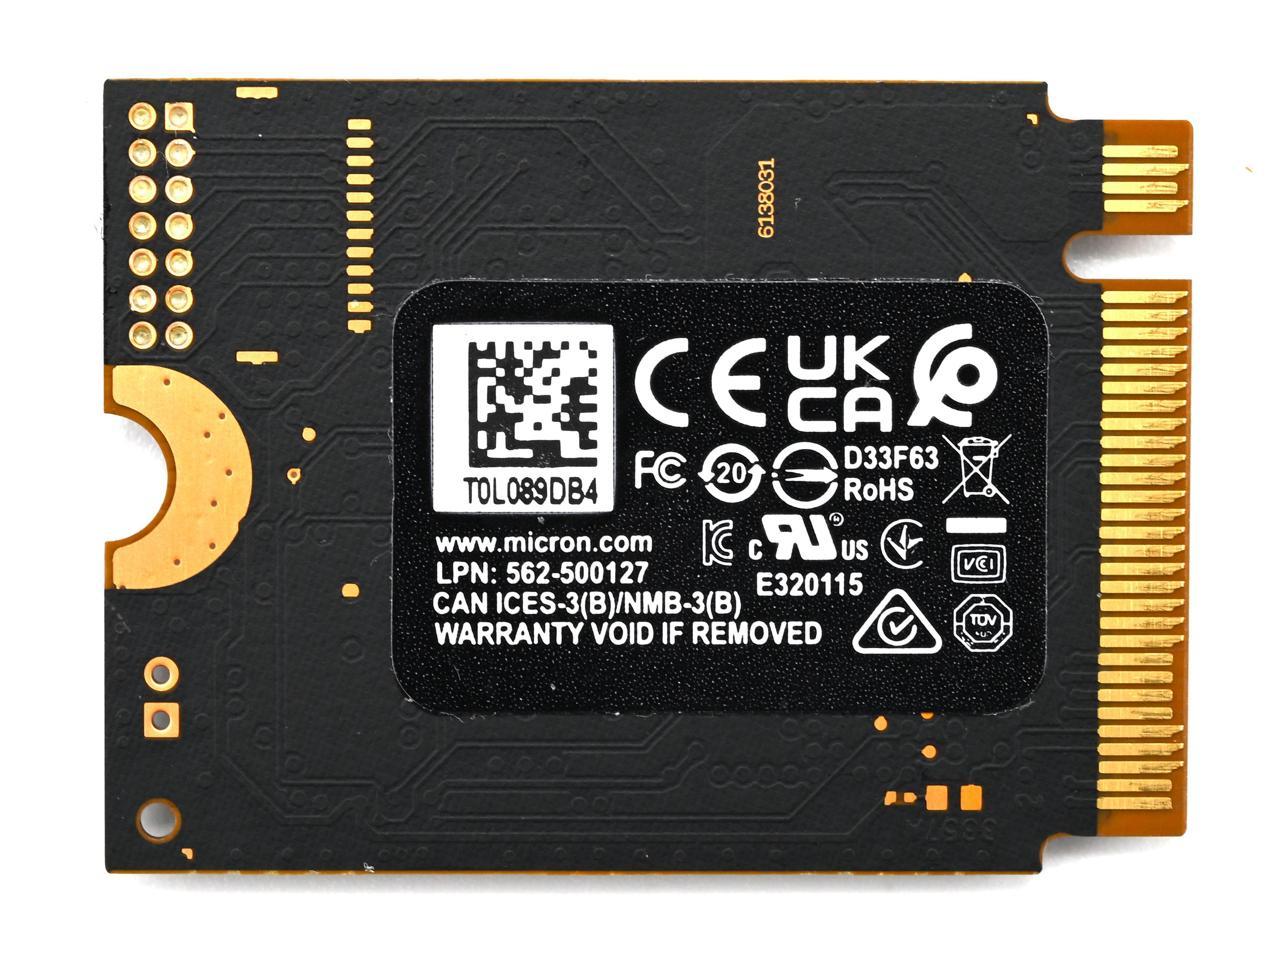 2TB Micron 2400 M.2 2230 NVMe PCIe 4.0x4 SSD MTFDKBK2T0QFM-1BD1AABYYR